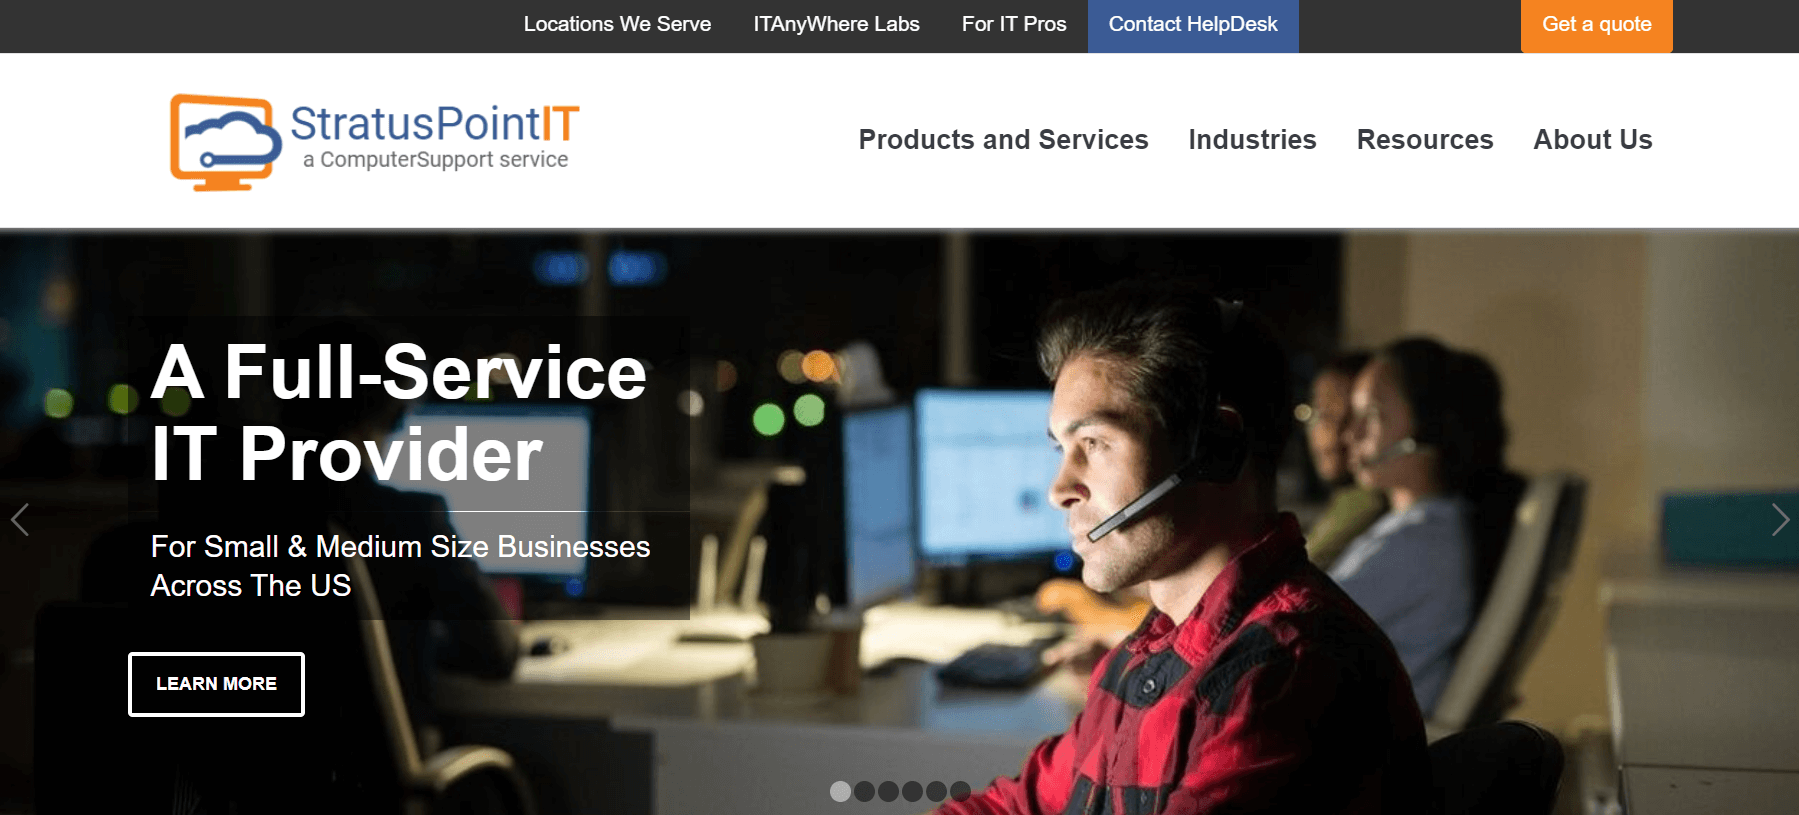 StratusPointIT homepage: A Full-Service IT Provider